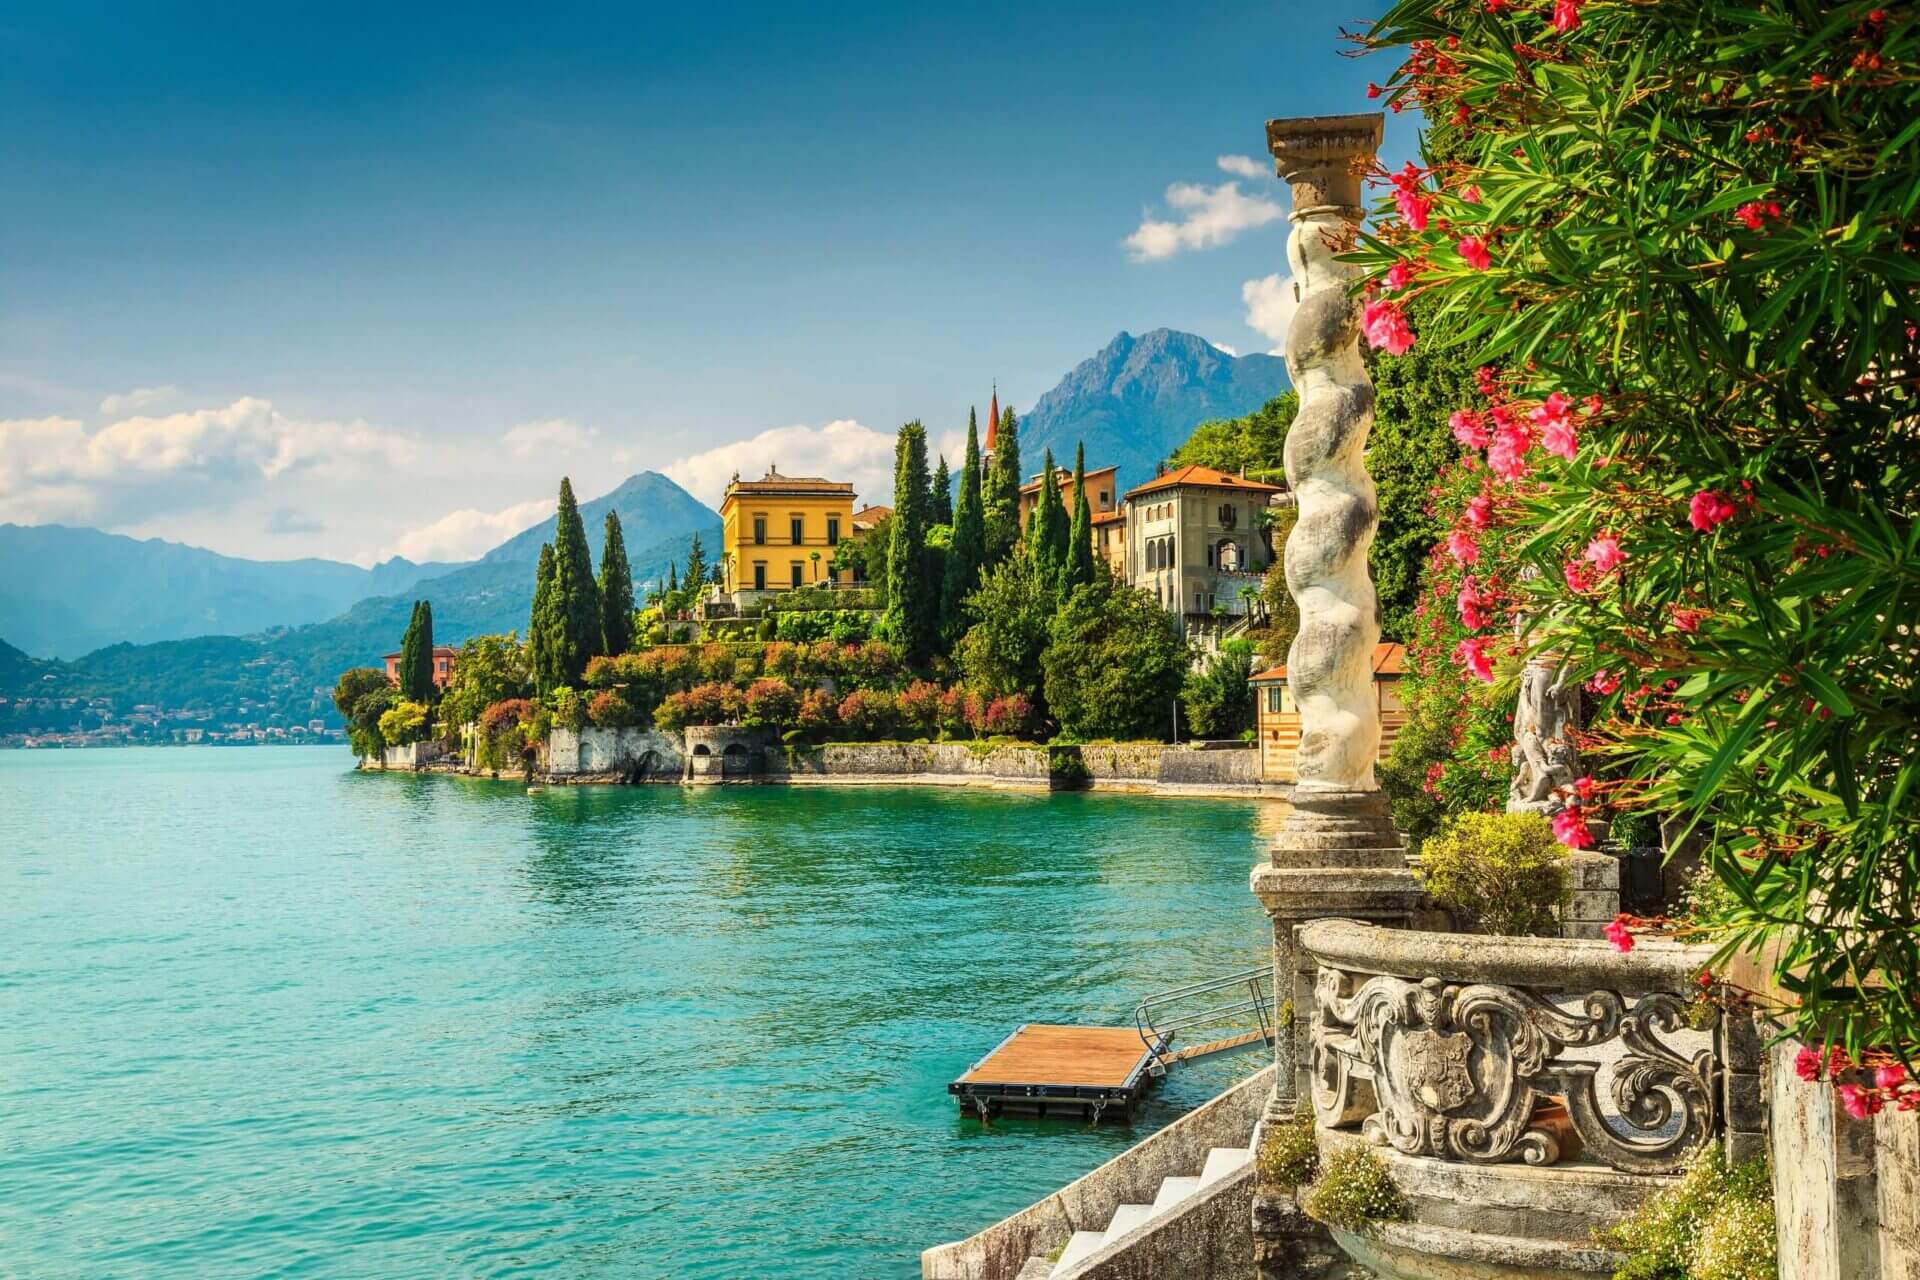 famous-luxury-villa-monastero-stunning-botanical-garden-decorated-with-mediterranean-oleander-flowers-lake-como-varenna-lombardy-region-italy-europe-stockpack-istock